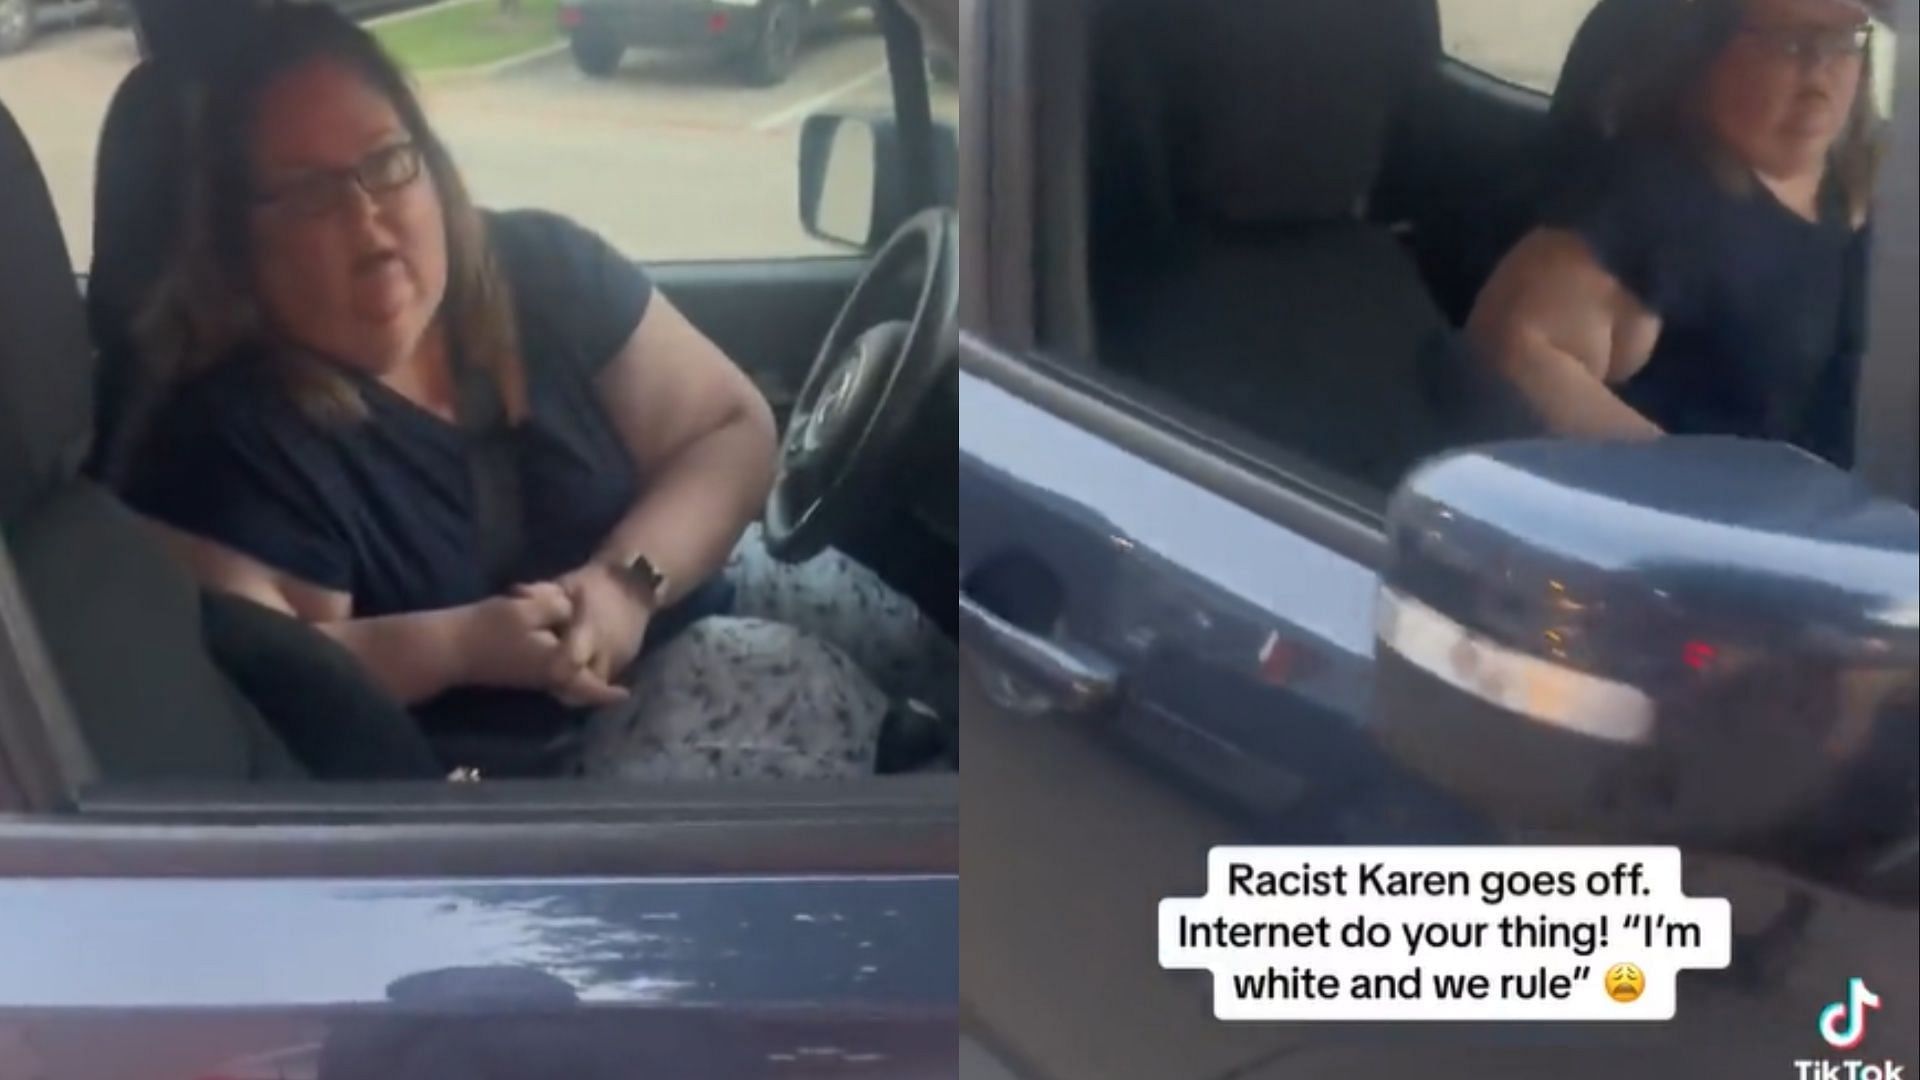 Lori Wolfe from Texas garners backlash for racist remarks. (Image via Twitter/@notcapnamerica)